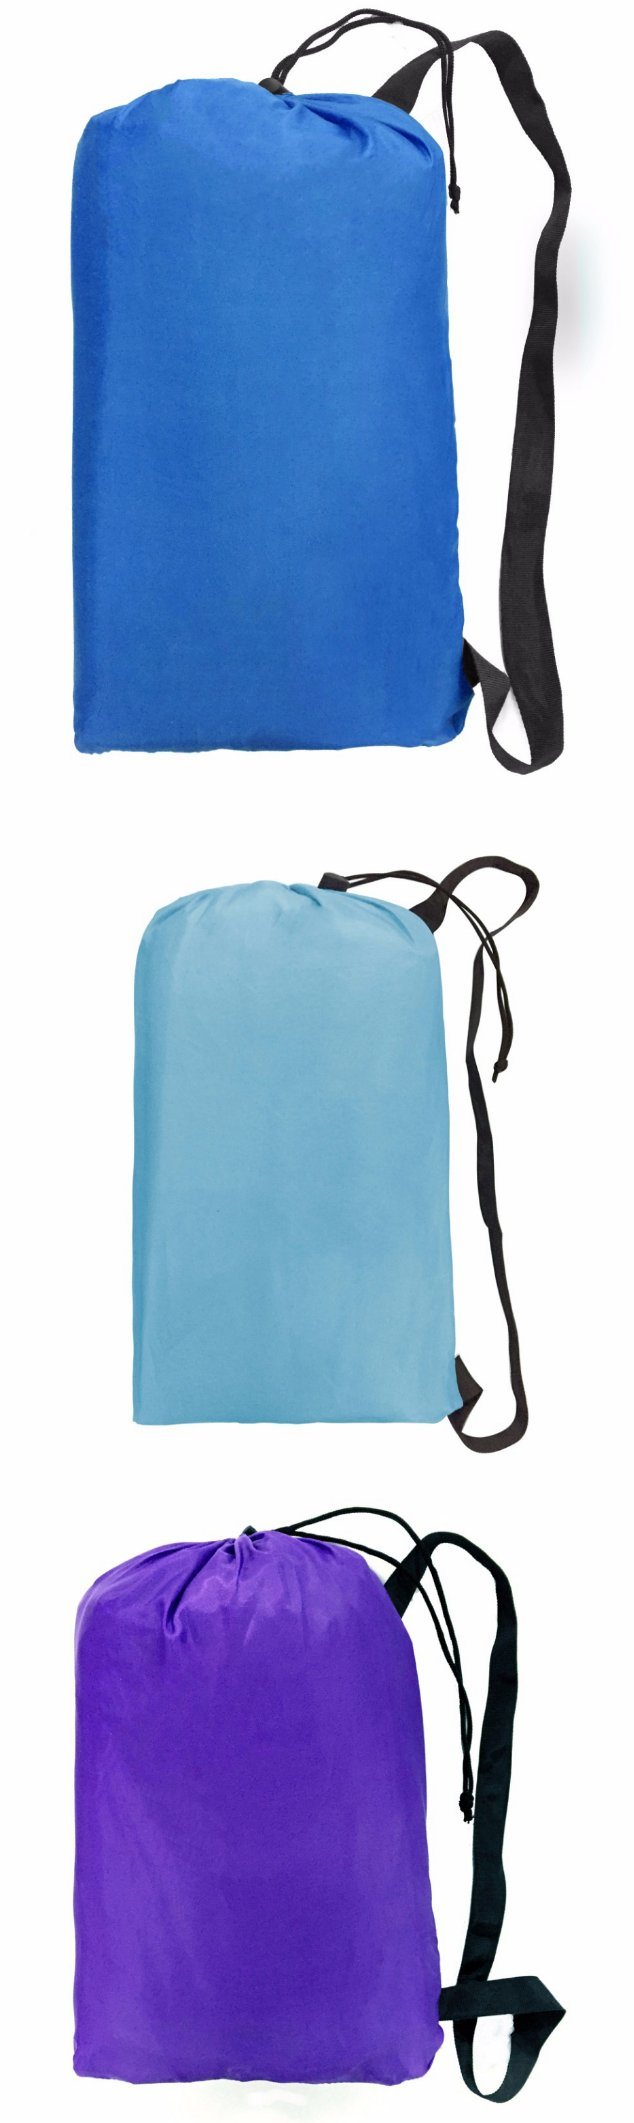 Camping Air Sofa Hangout Lazy Bag Inflatable Air Bed Waterproof Beach Air Sleeping Bag